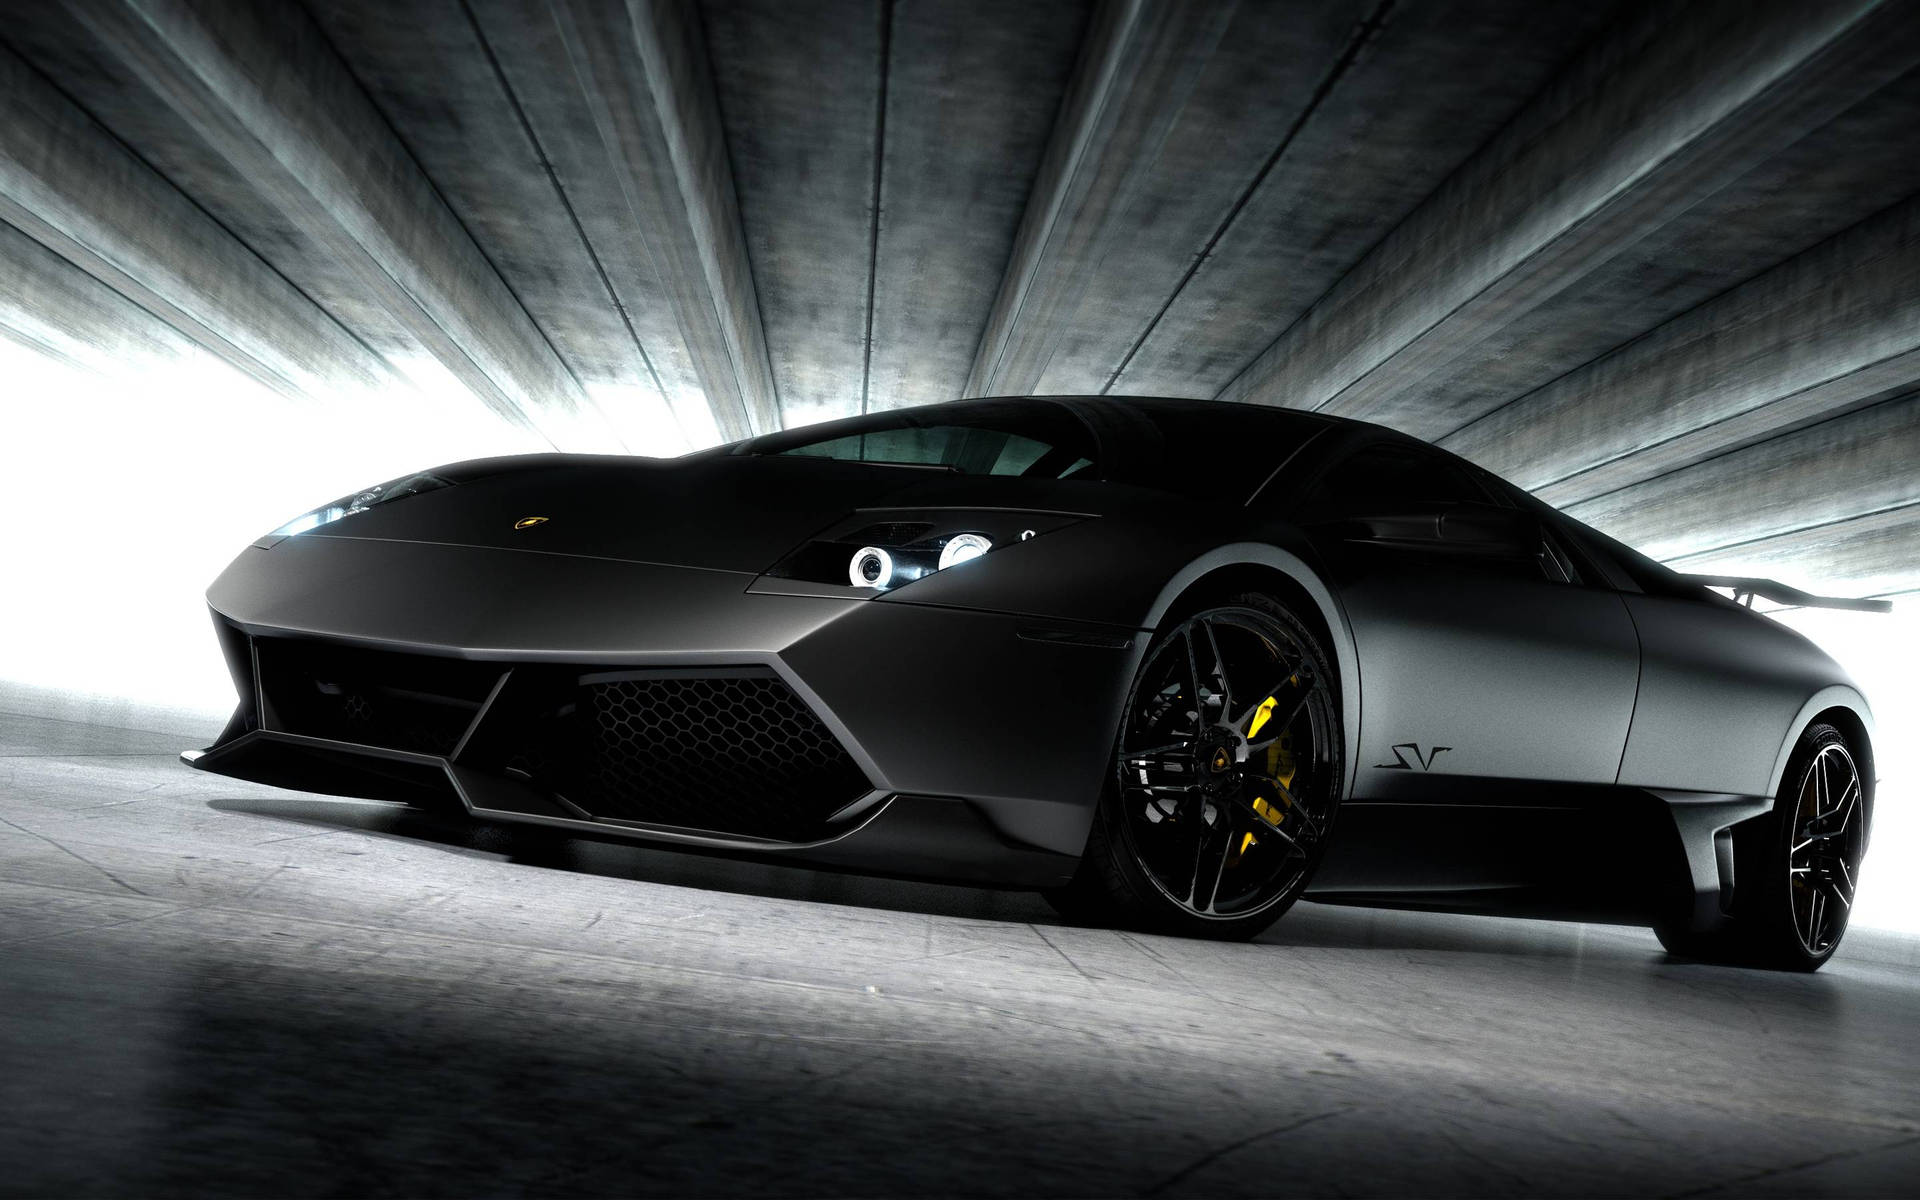 Cool Cars: Sleek And Sharp Lamborghini Wallpaper